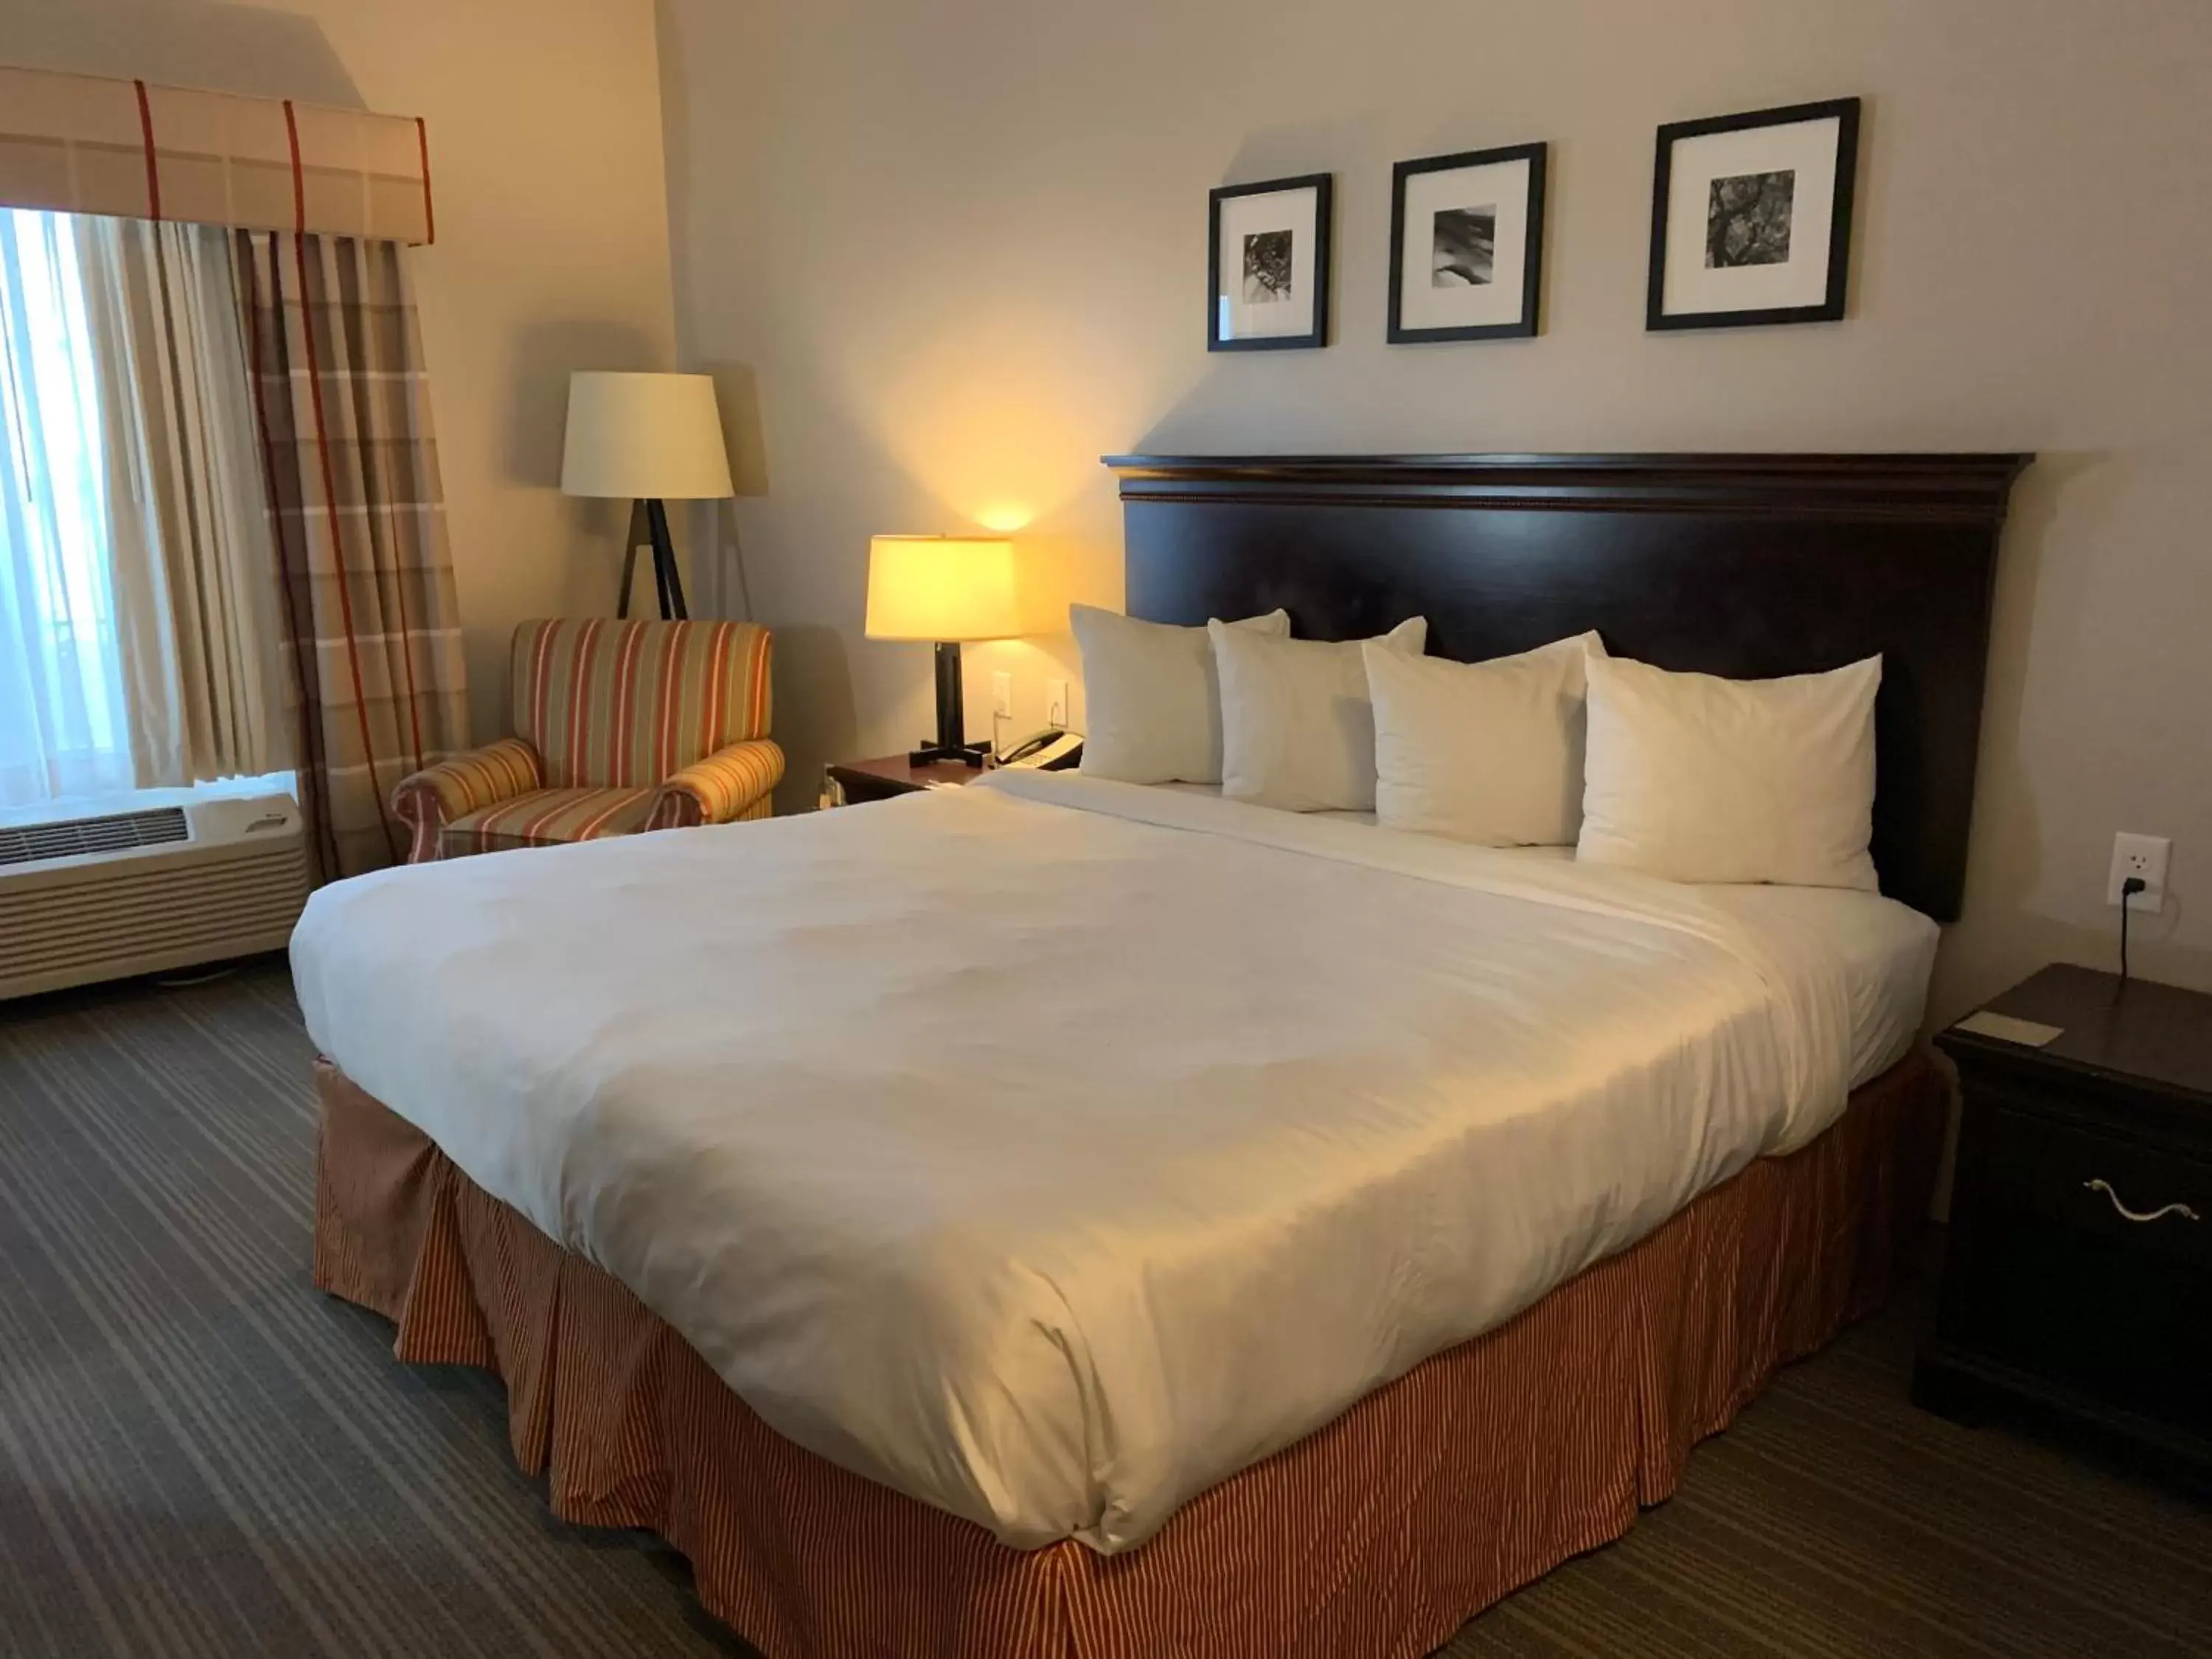 Bed in Country Inn & Suites by Radisson, Kearney, NE